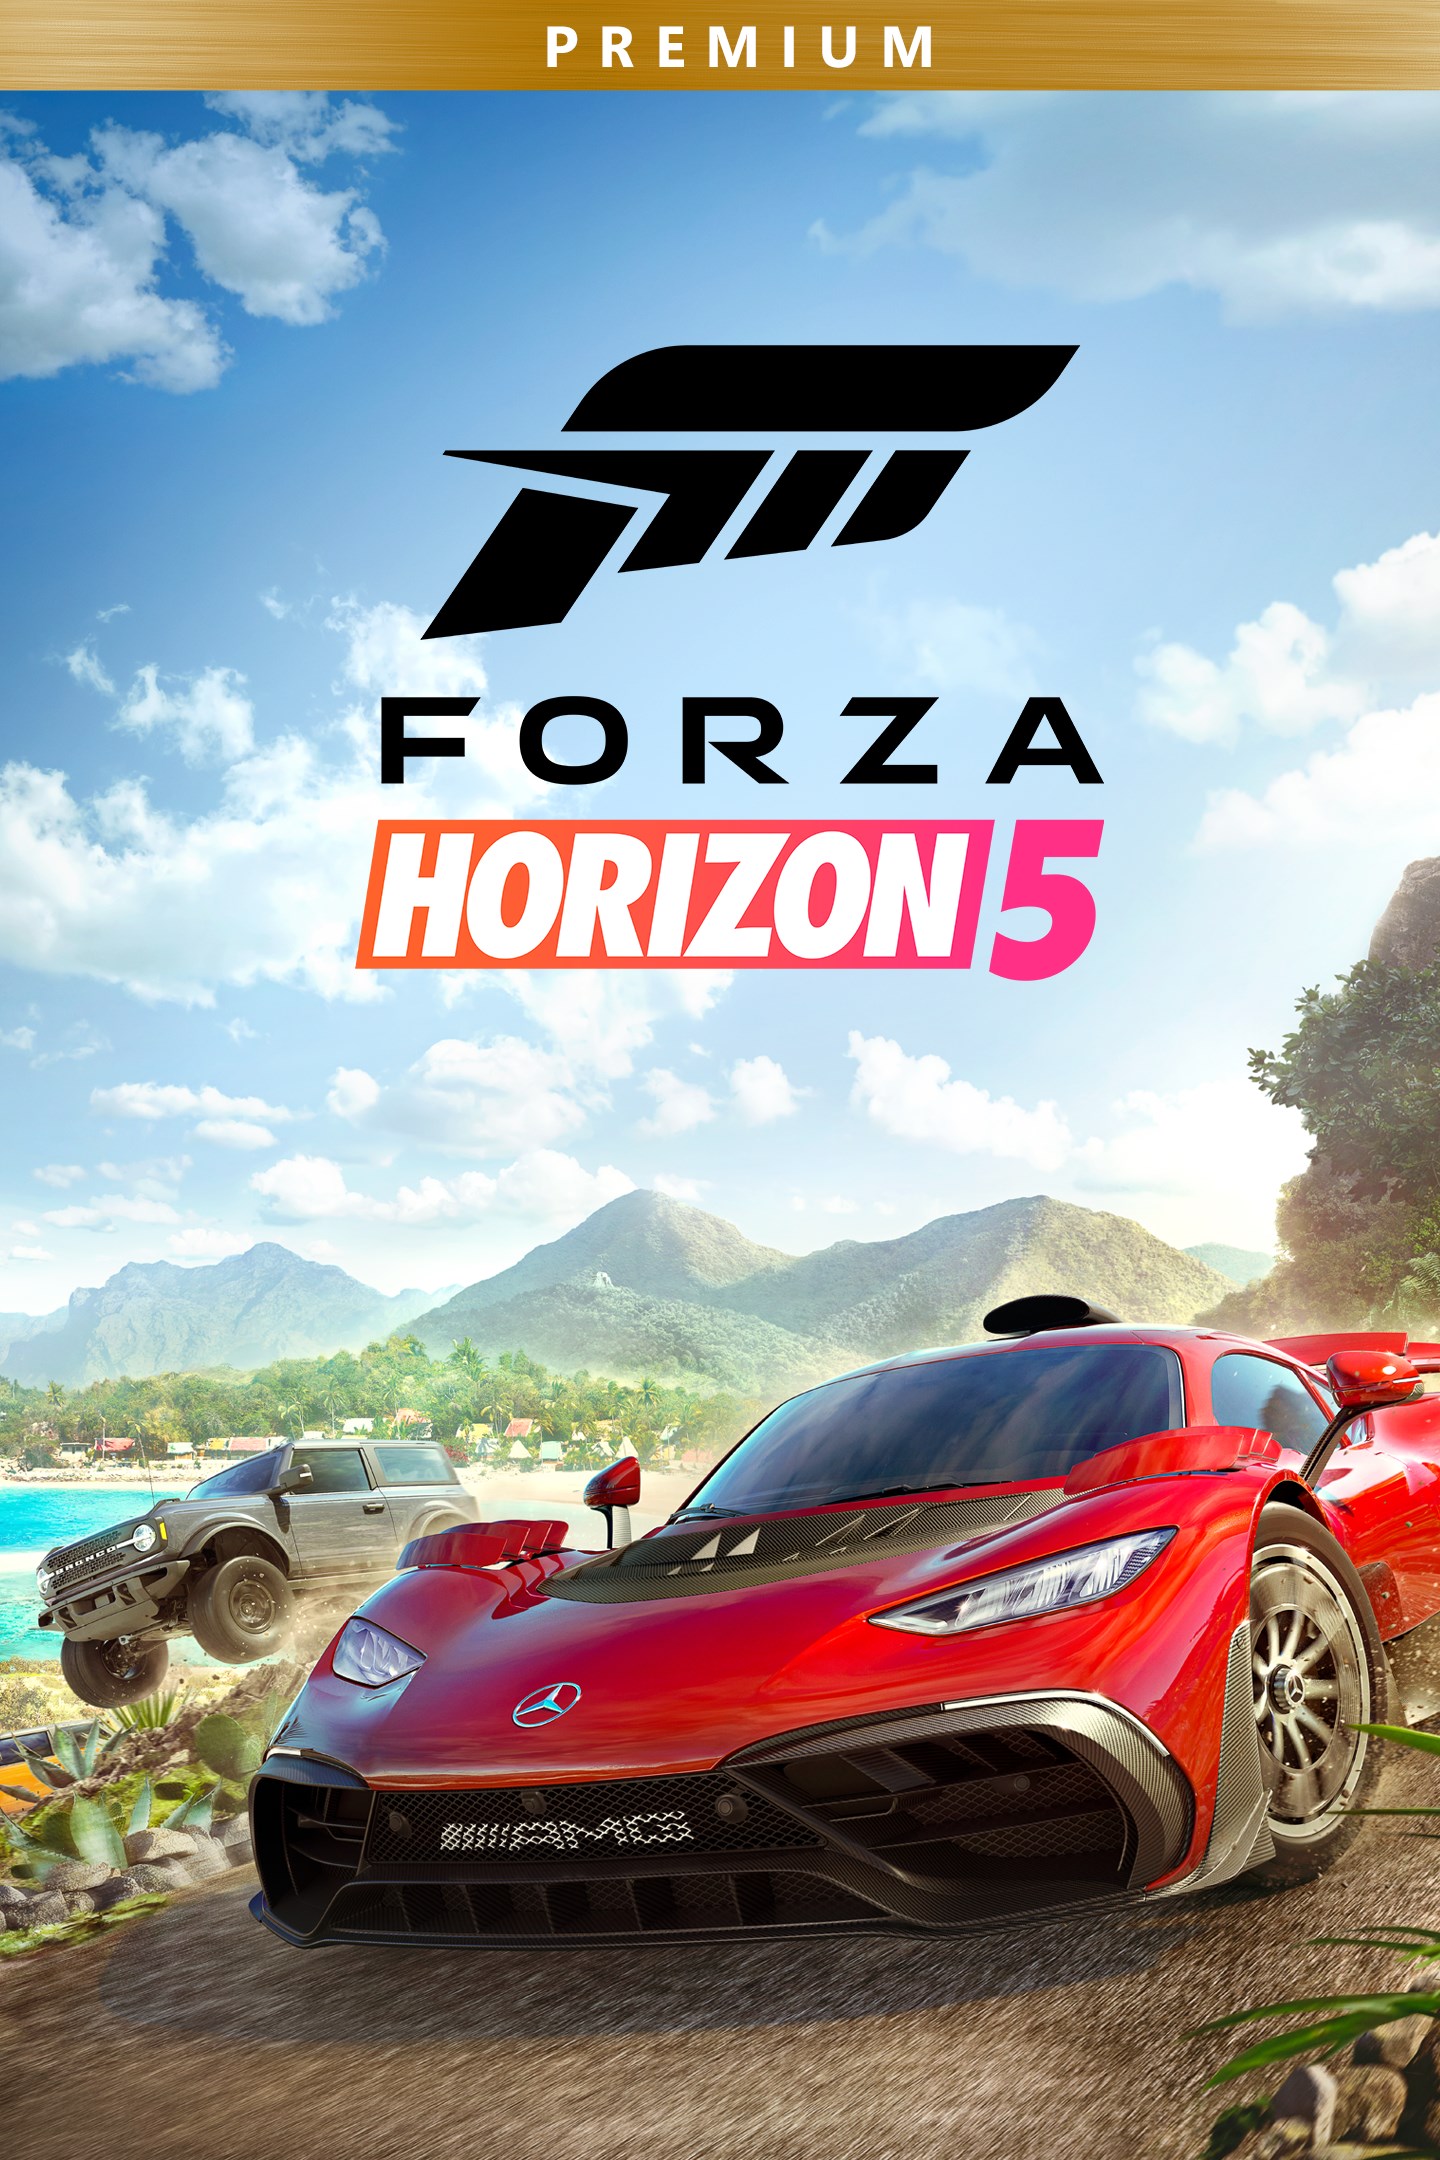 Forza Horizon 5 Premium Edition box shot